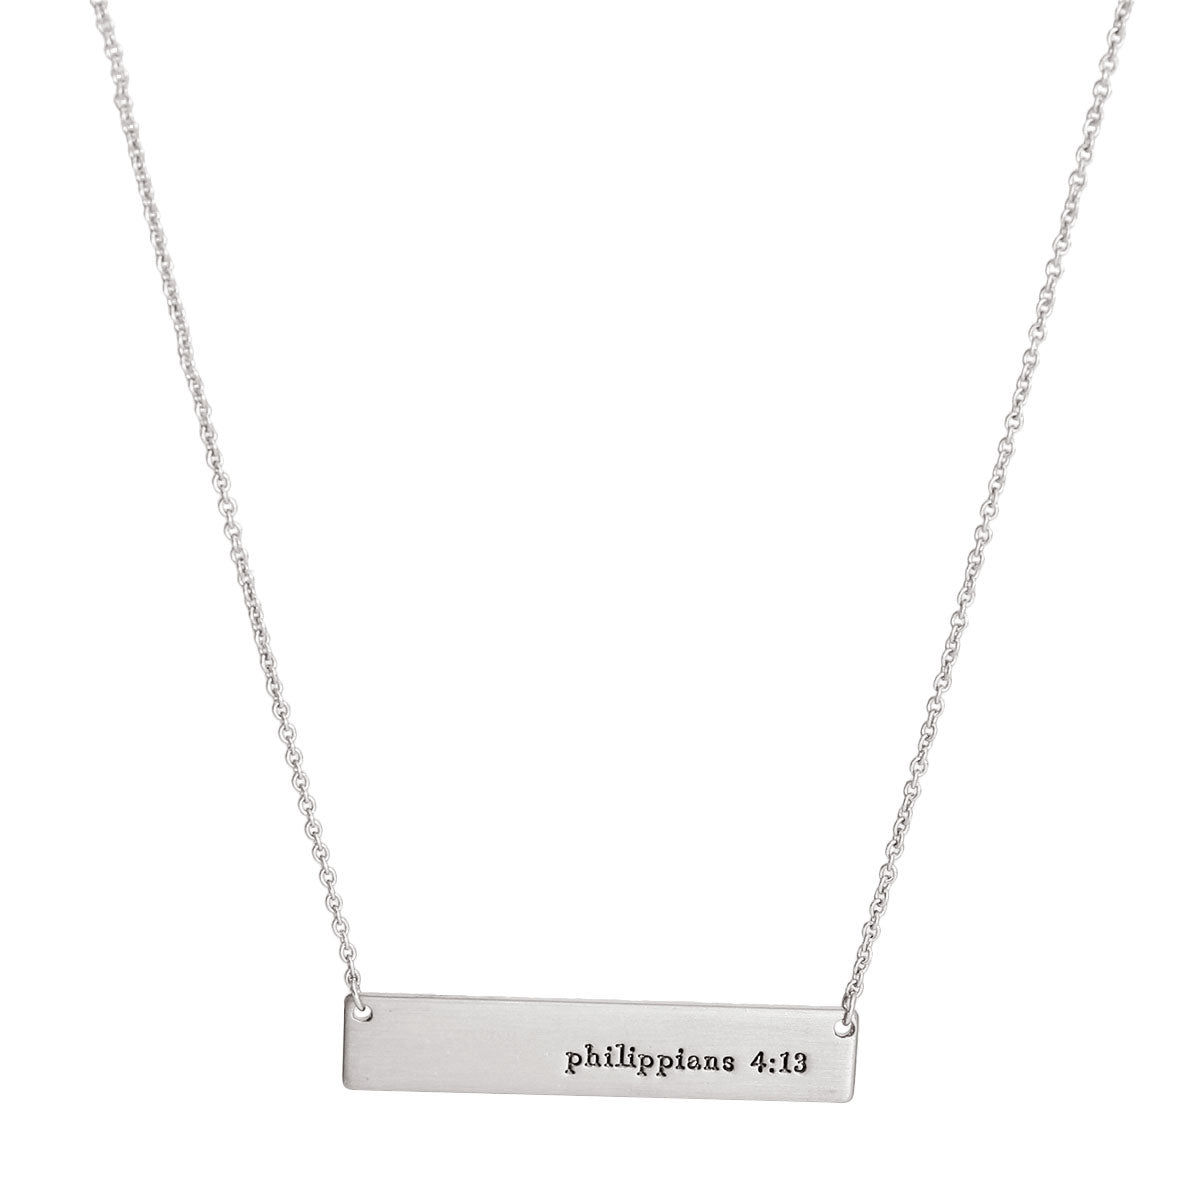 Silver Philippians Plate Necklace